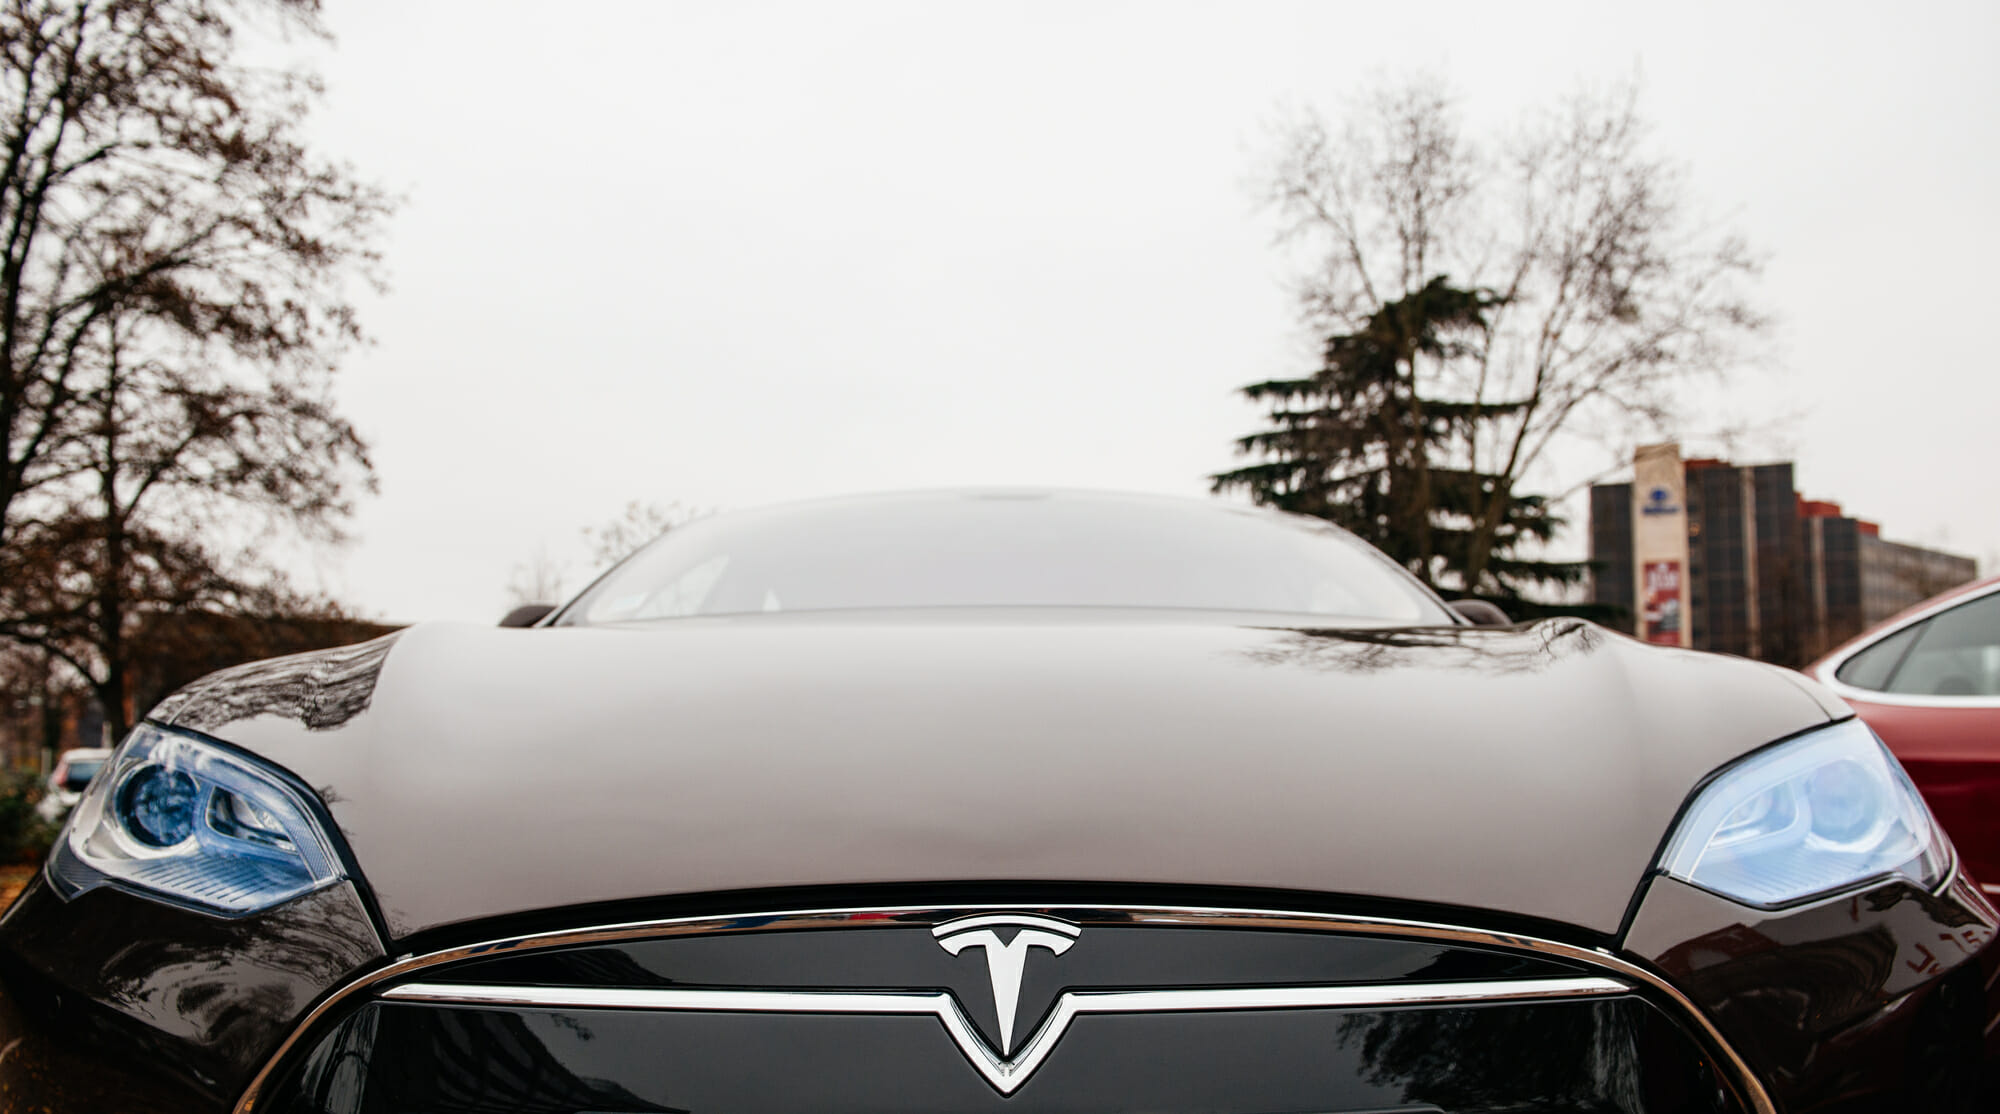 Closeup of Tesla logo on model